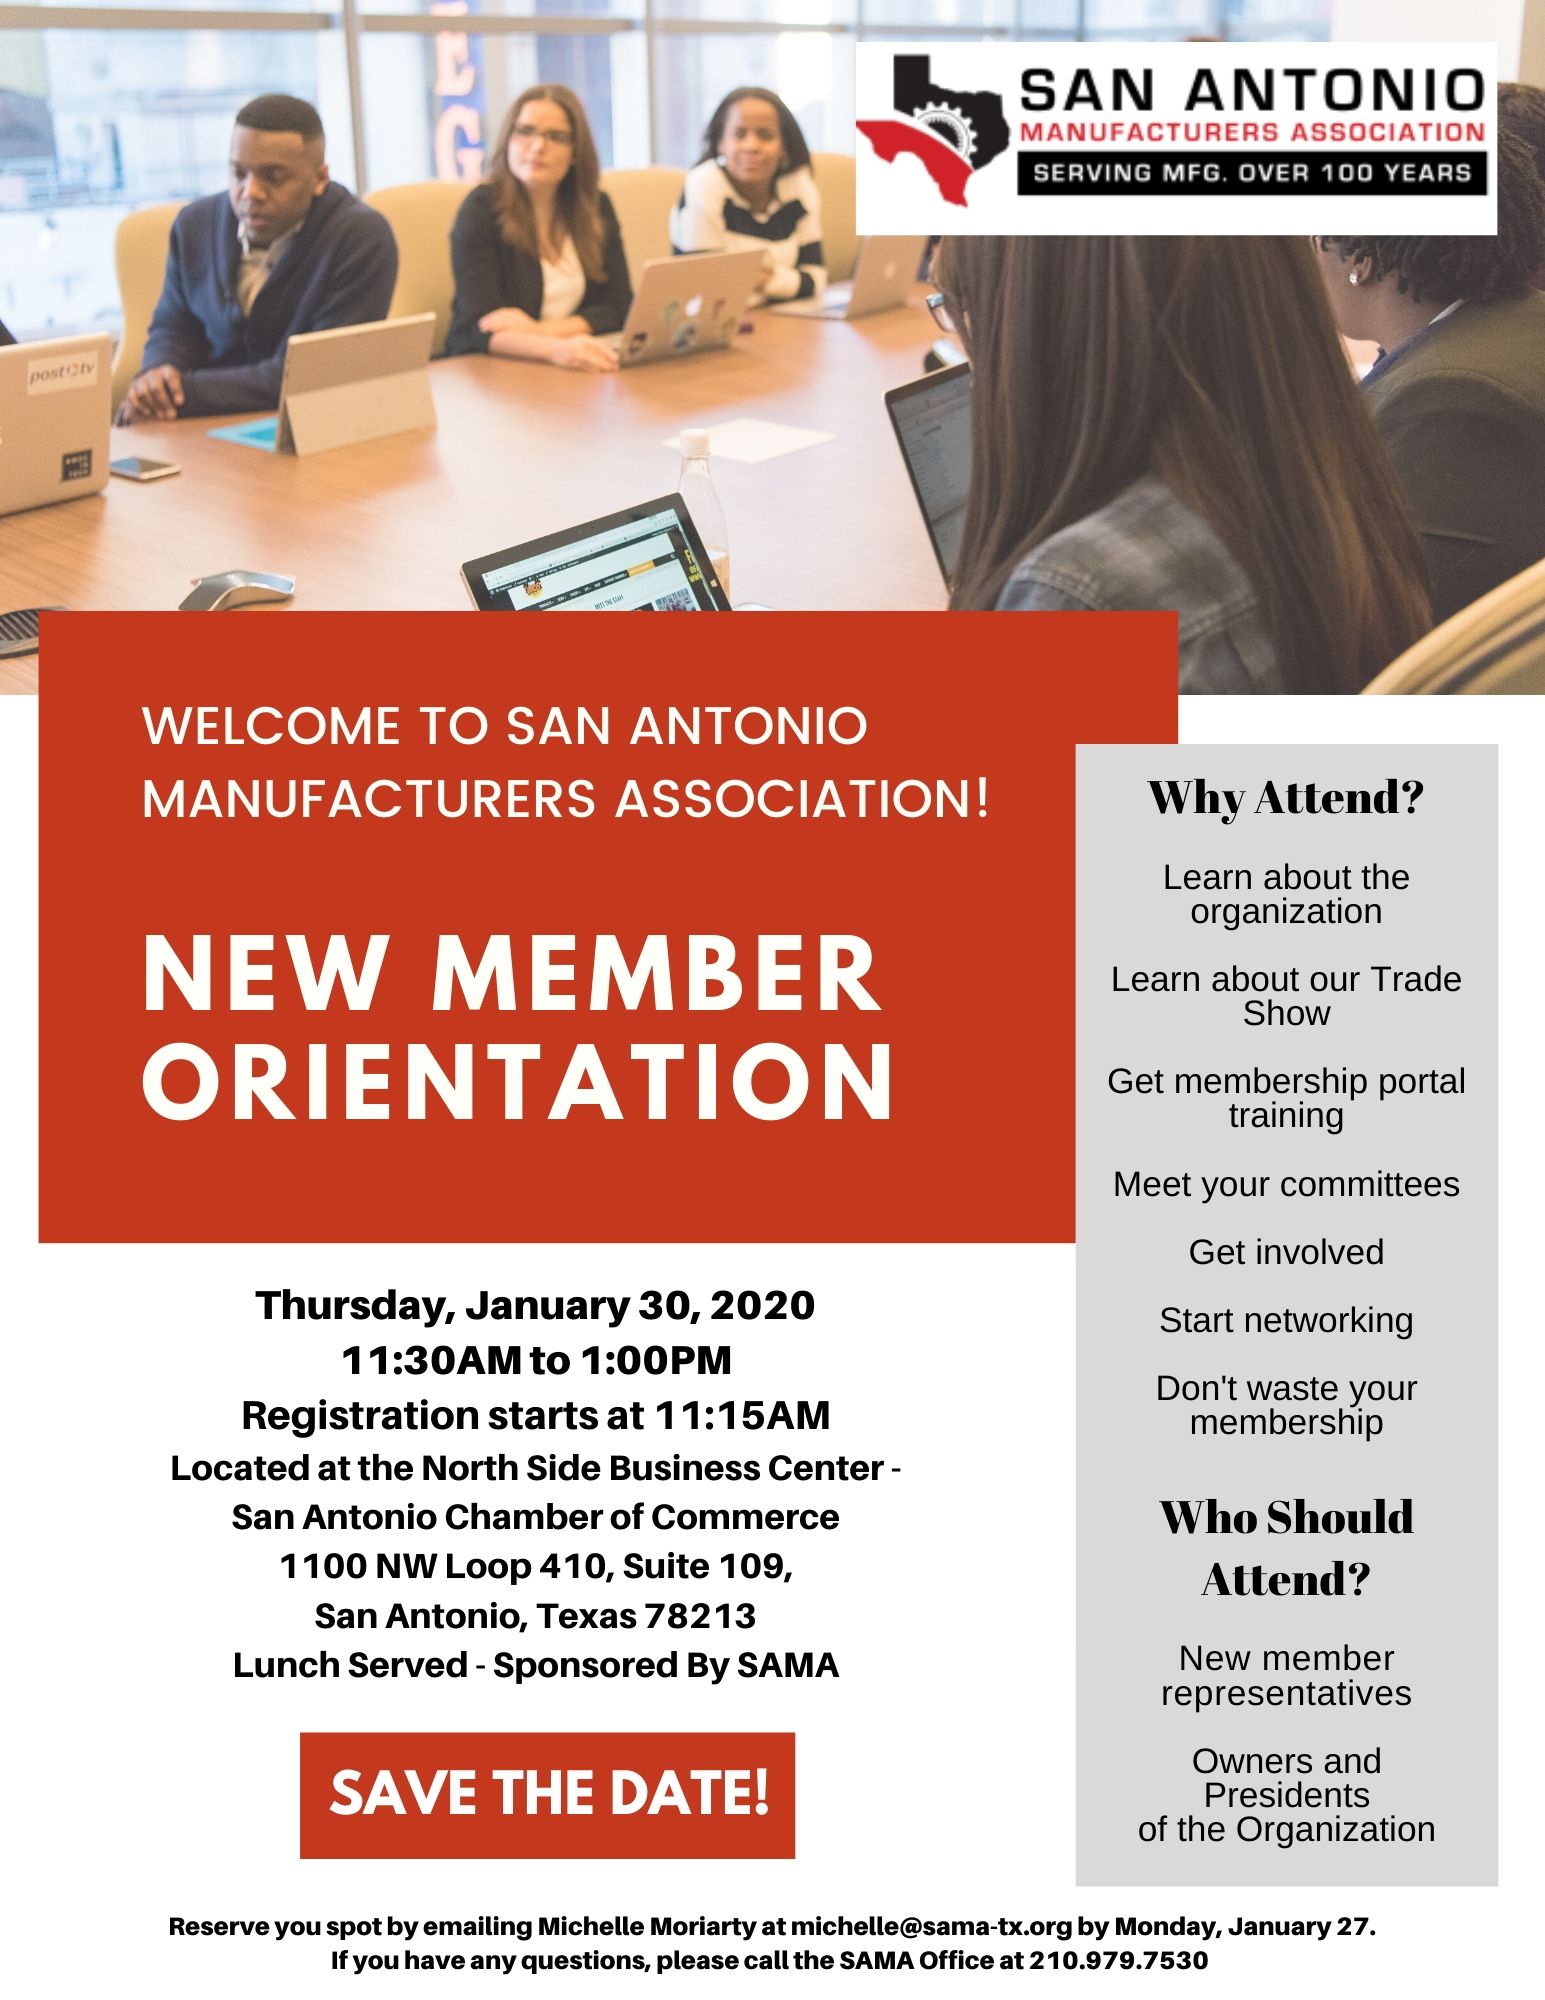 sama-new-member-orientation-lunch-learn-january-30-2020-by